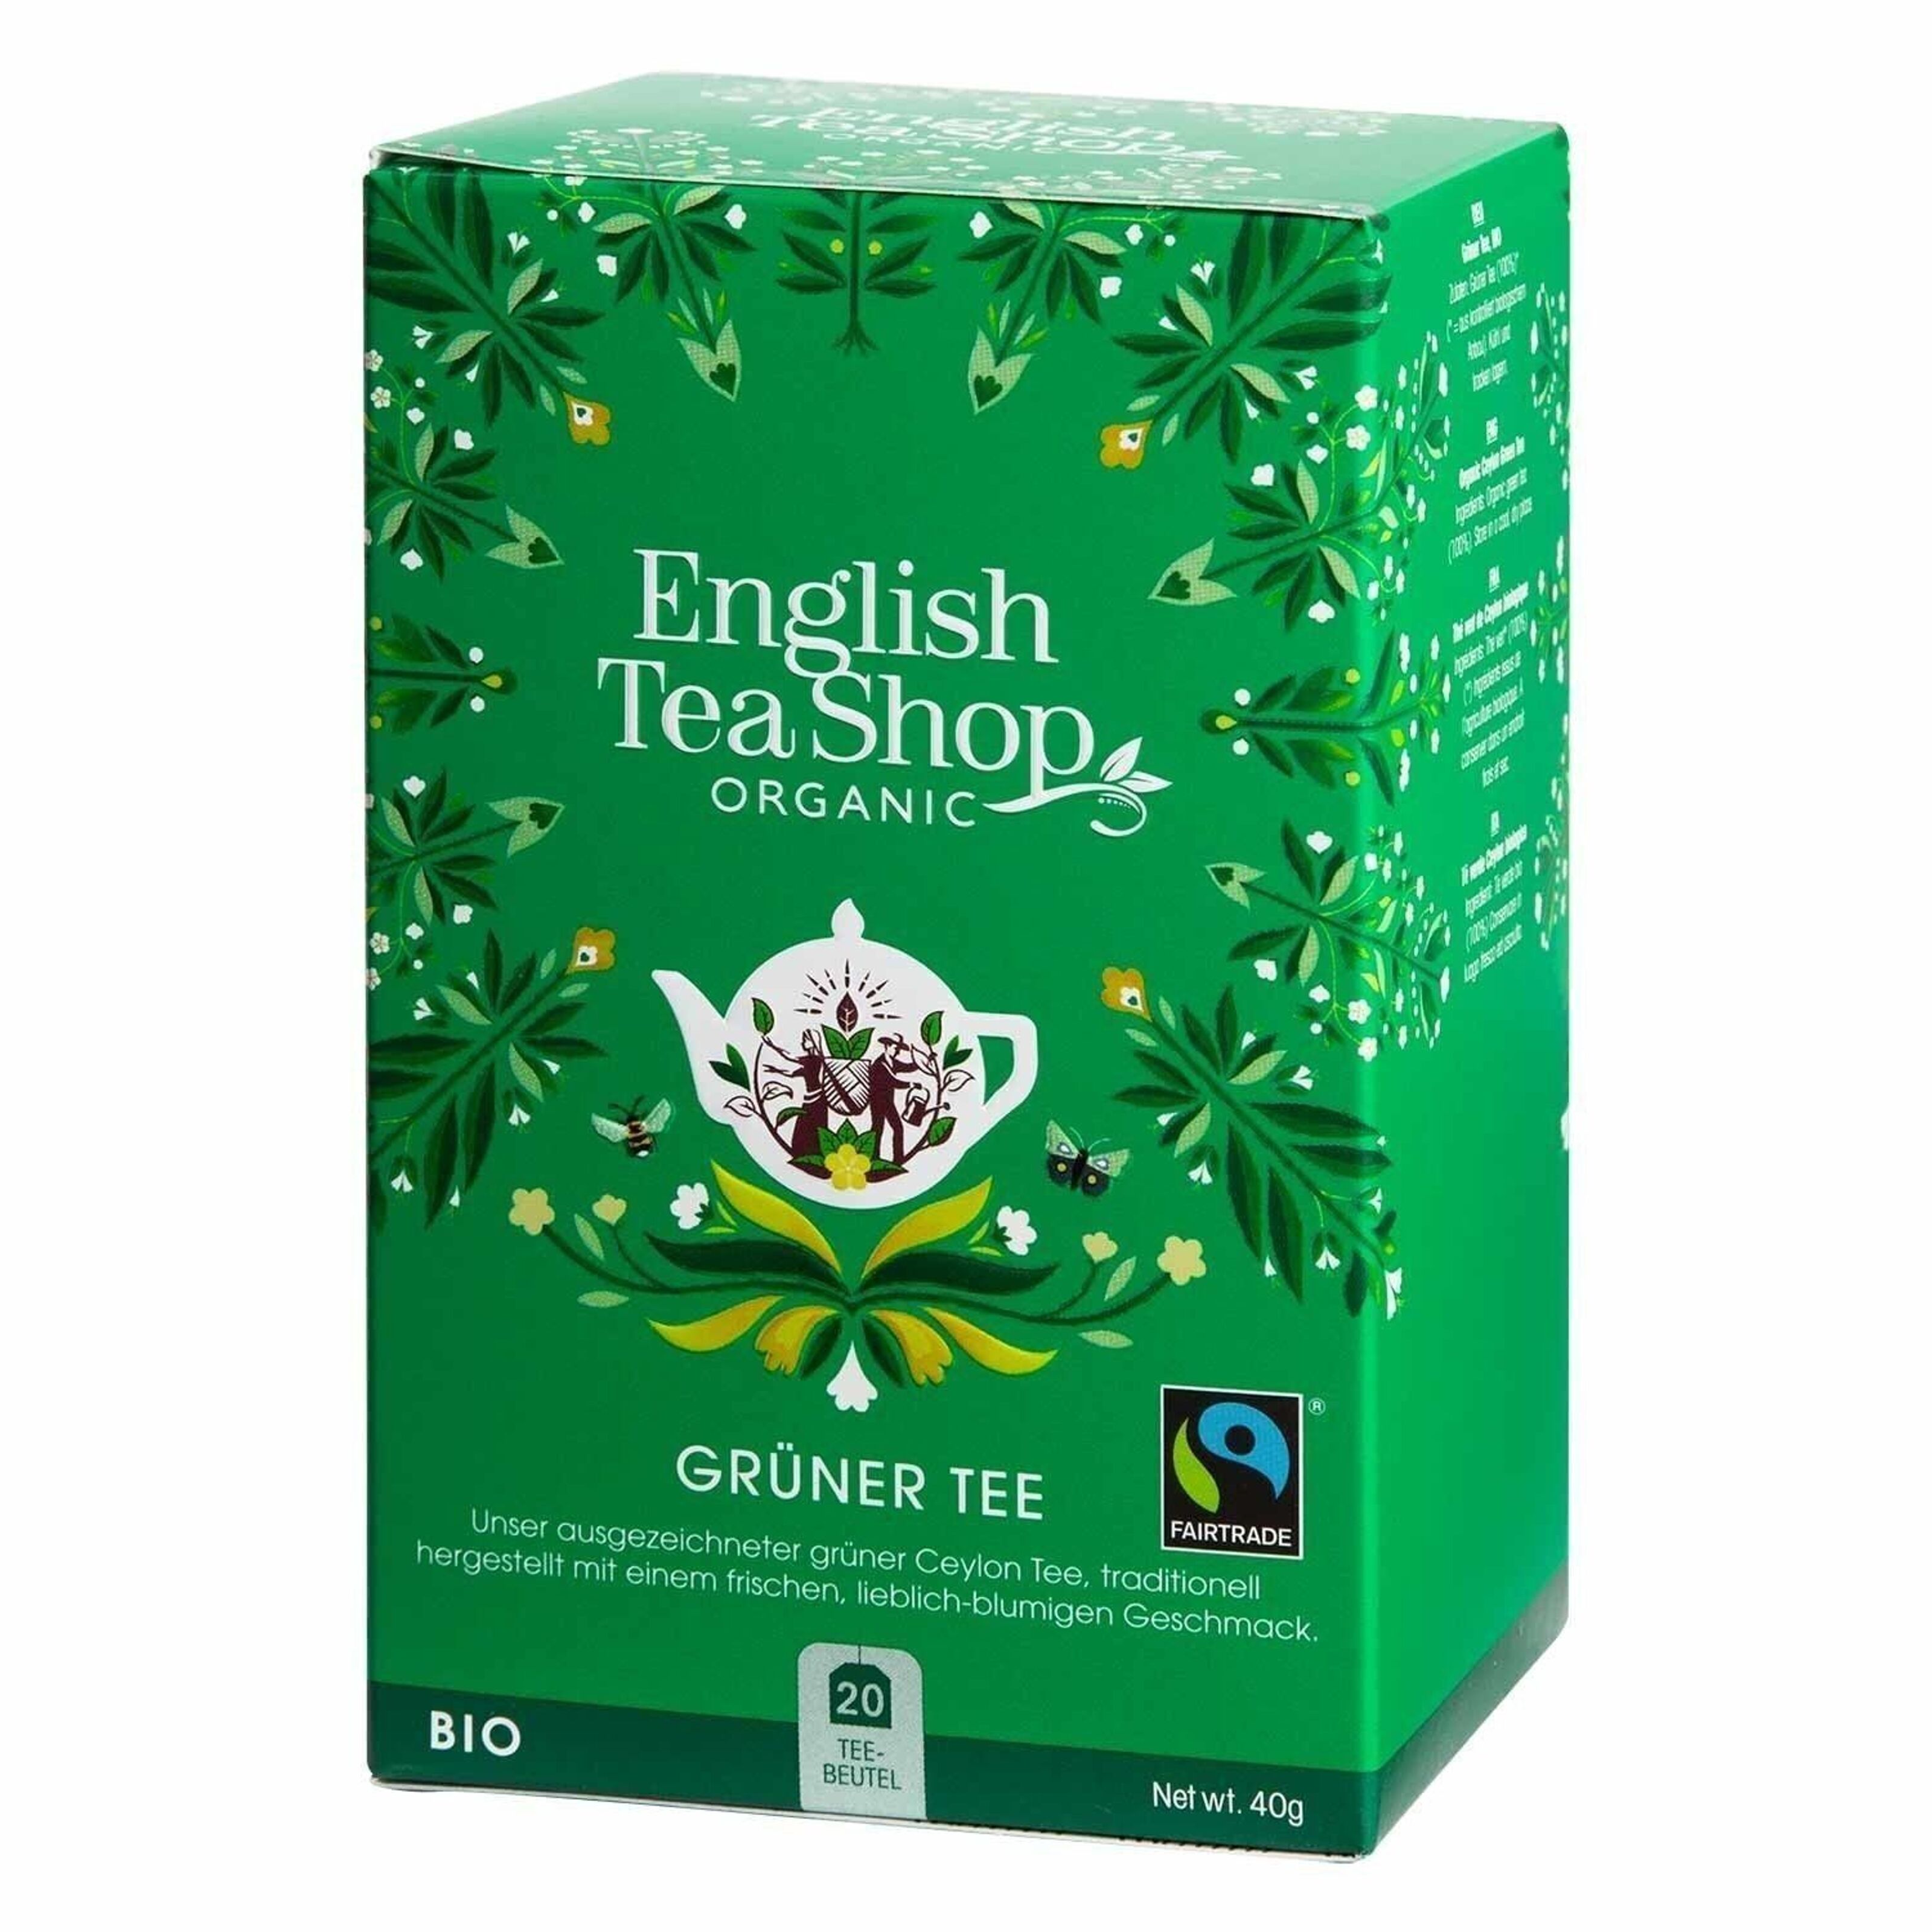 English Tea Shop Thé Vert - Bio & Fairtrade, 100 g - Boutique en ligne  Piccantino France